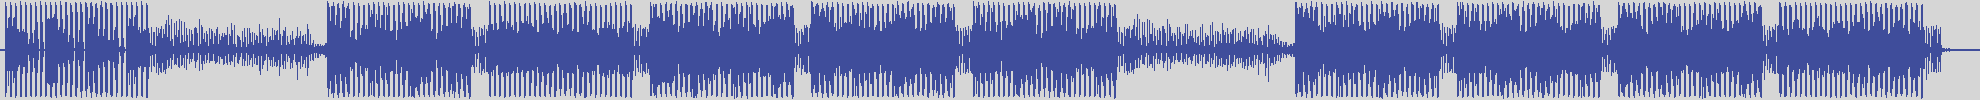 atomic_recordings [AR012] Ron Plastic - Great Team [Clubberz Mix] audio wave form